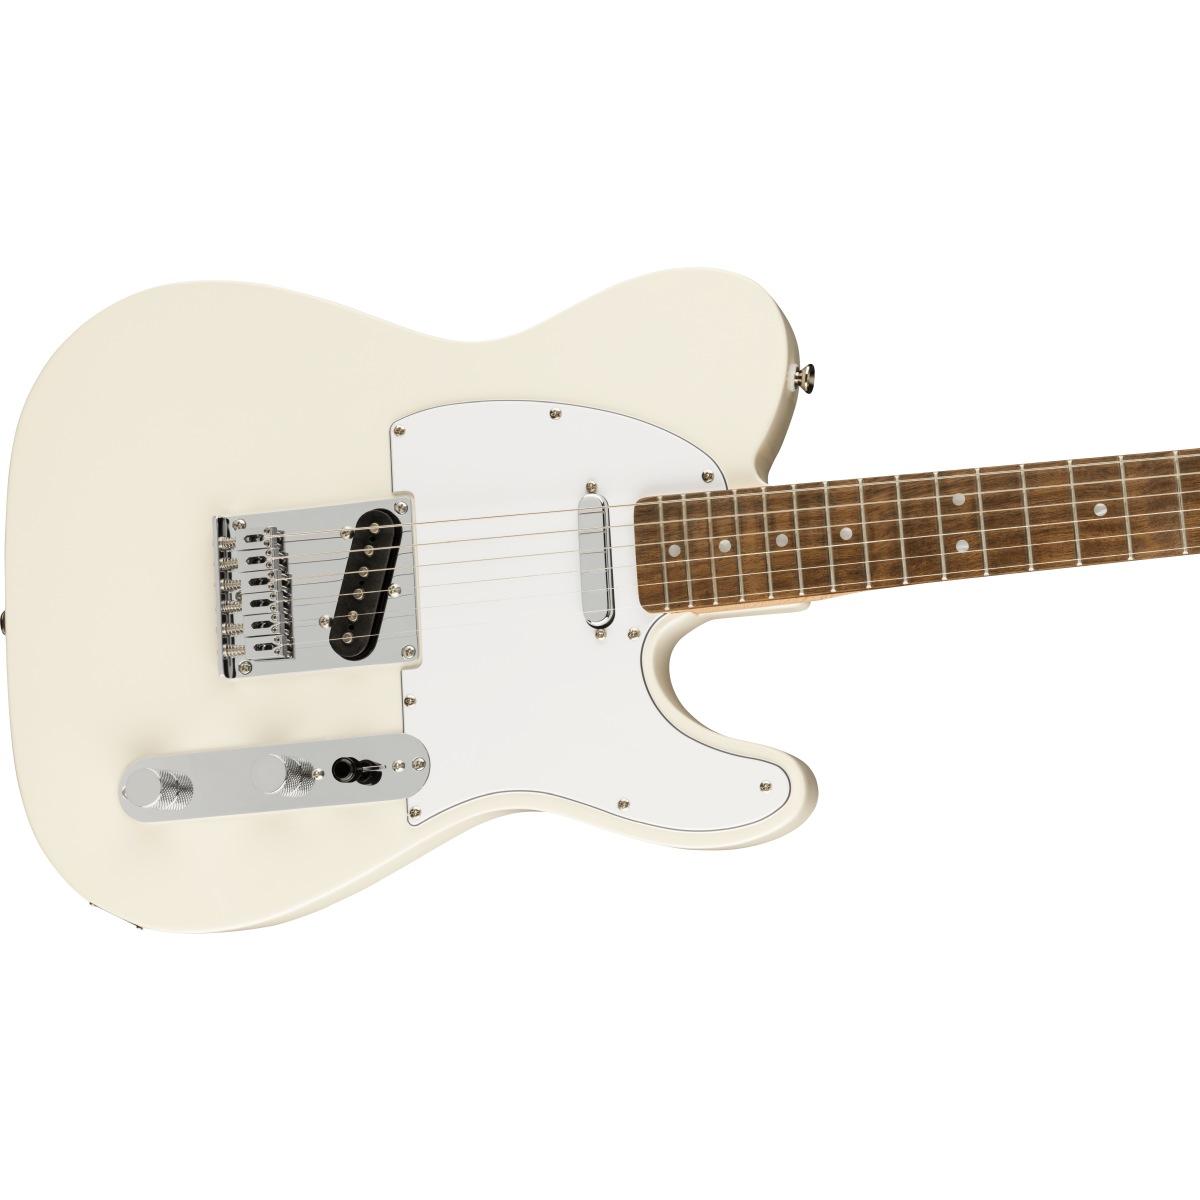 Fender affinity telecaster lrl wpg olympic white chitarra elettrica